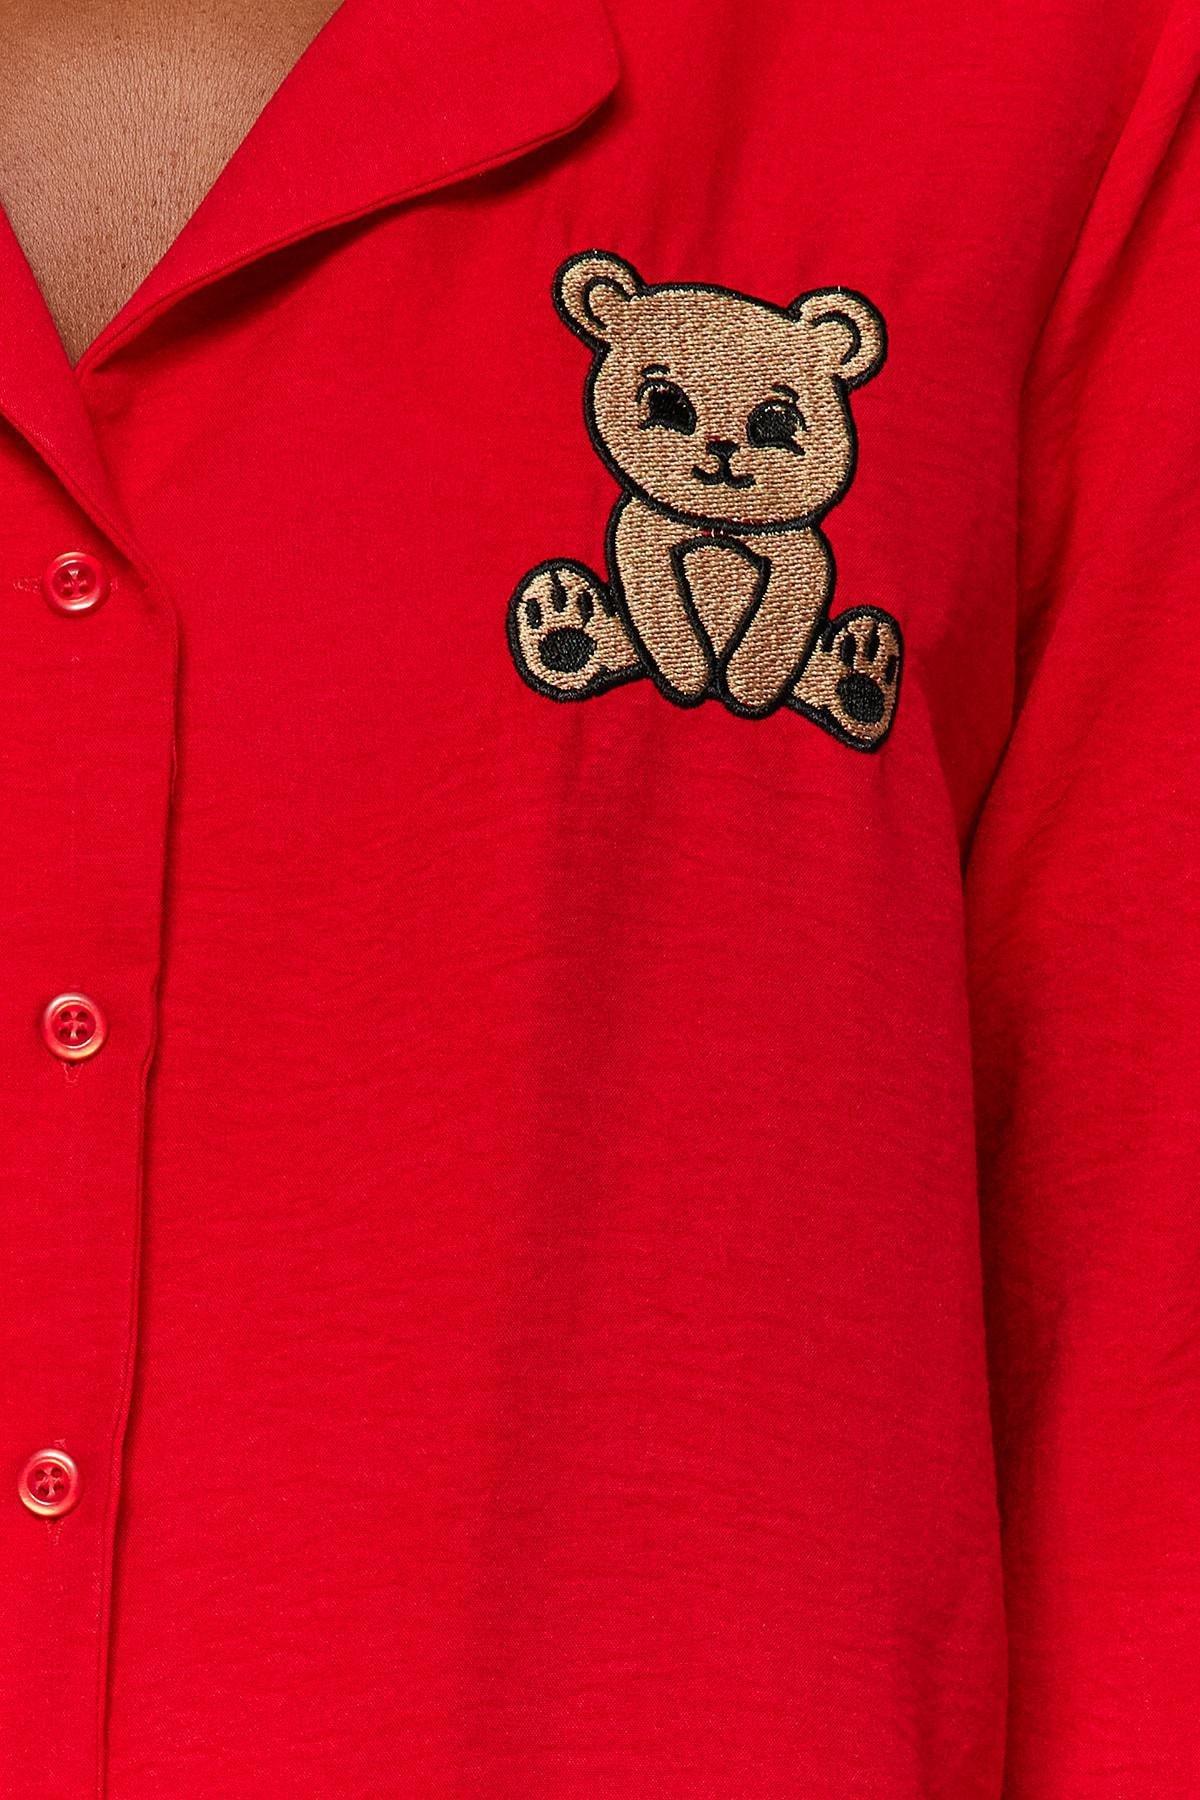 Trendyol - Red Embroidery Satin Pyjamas Set